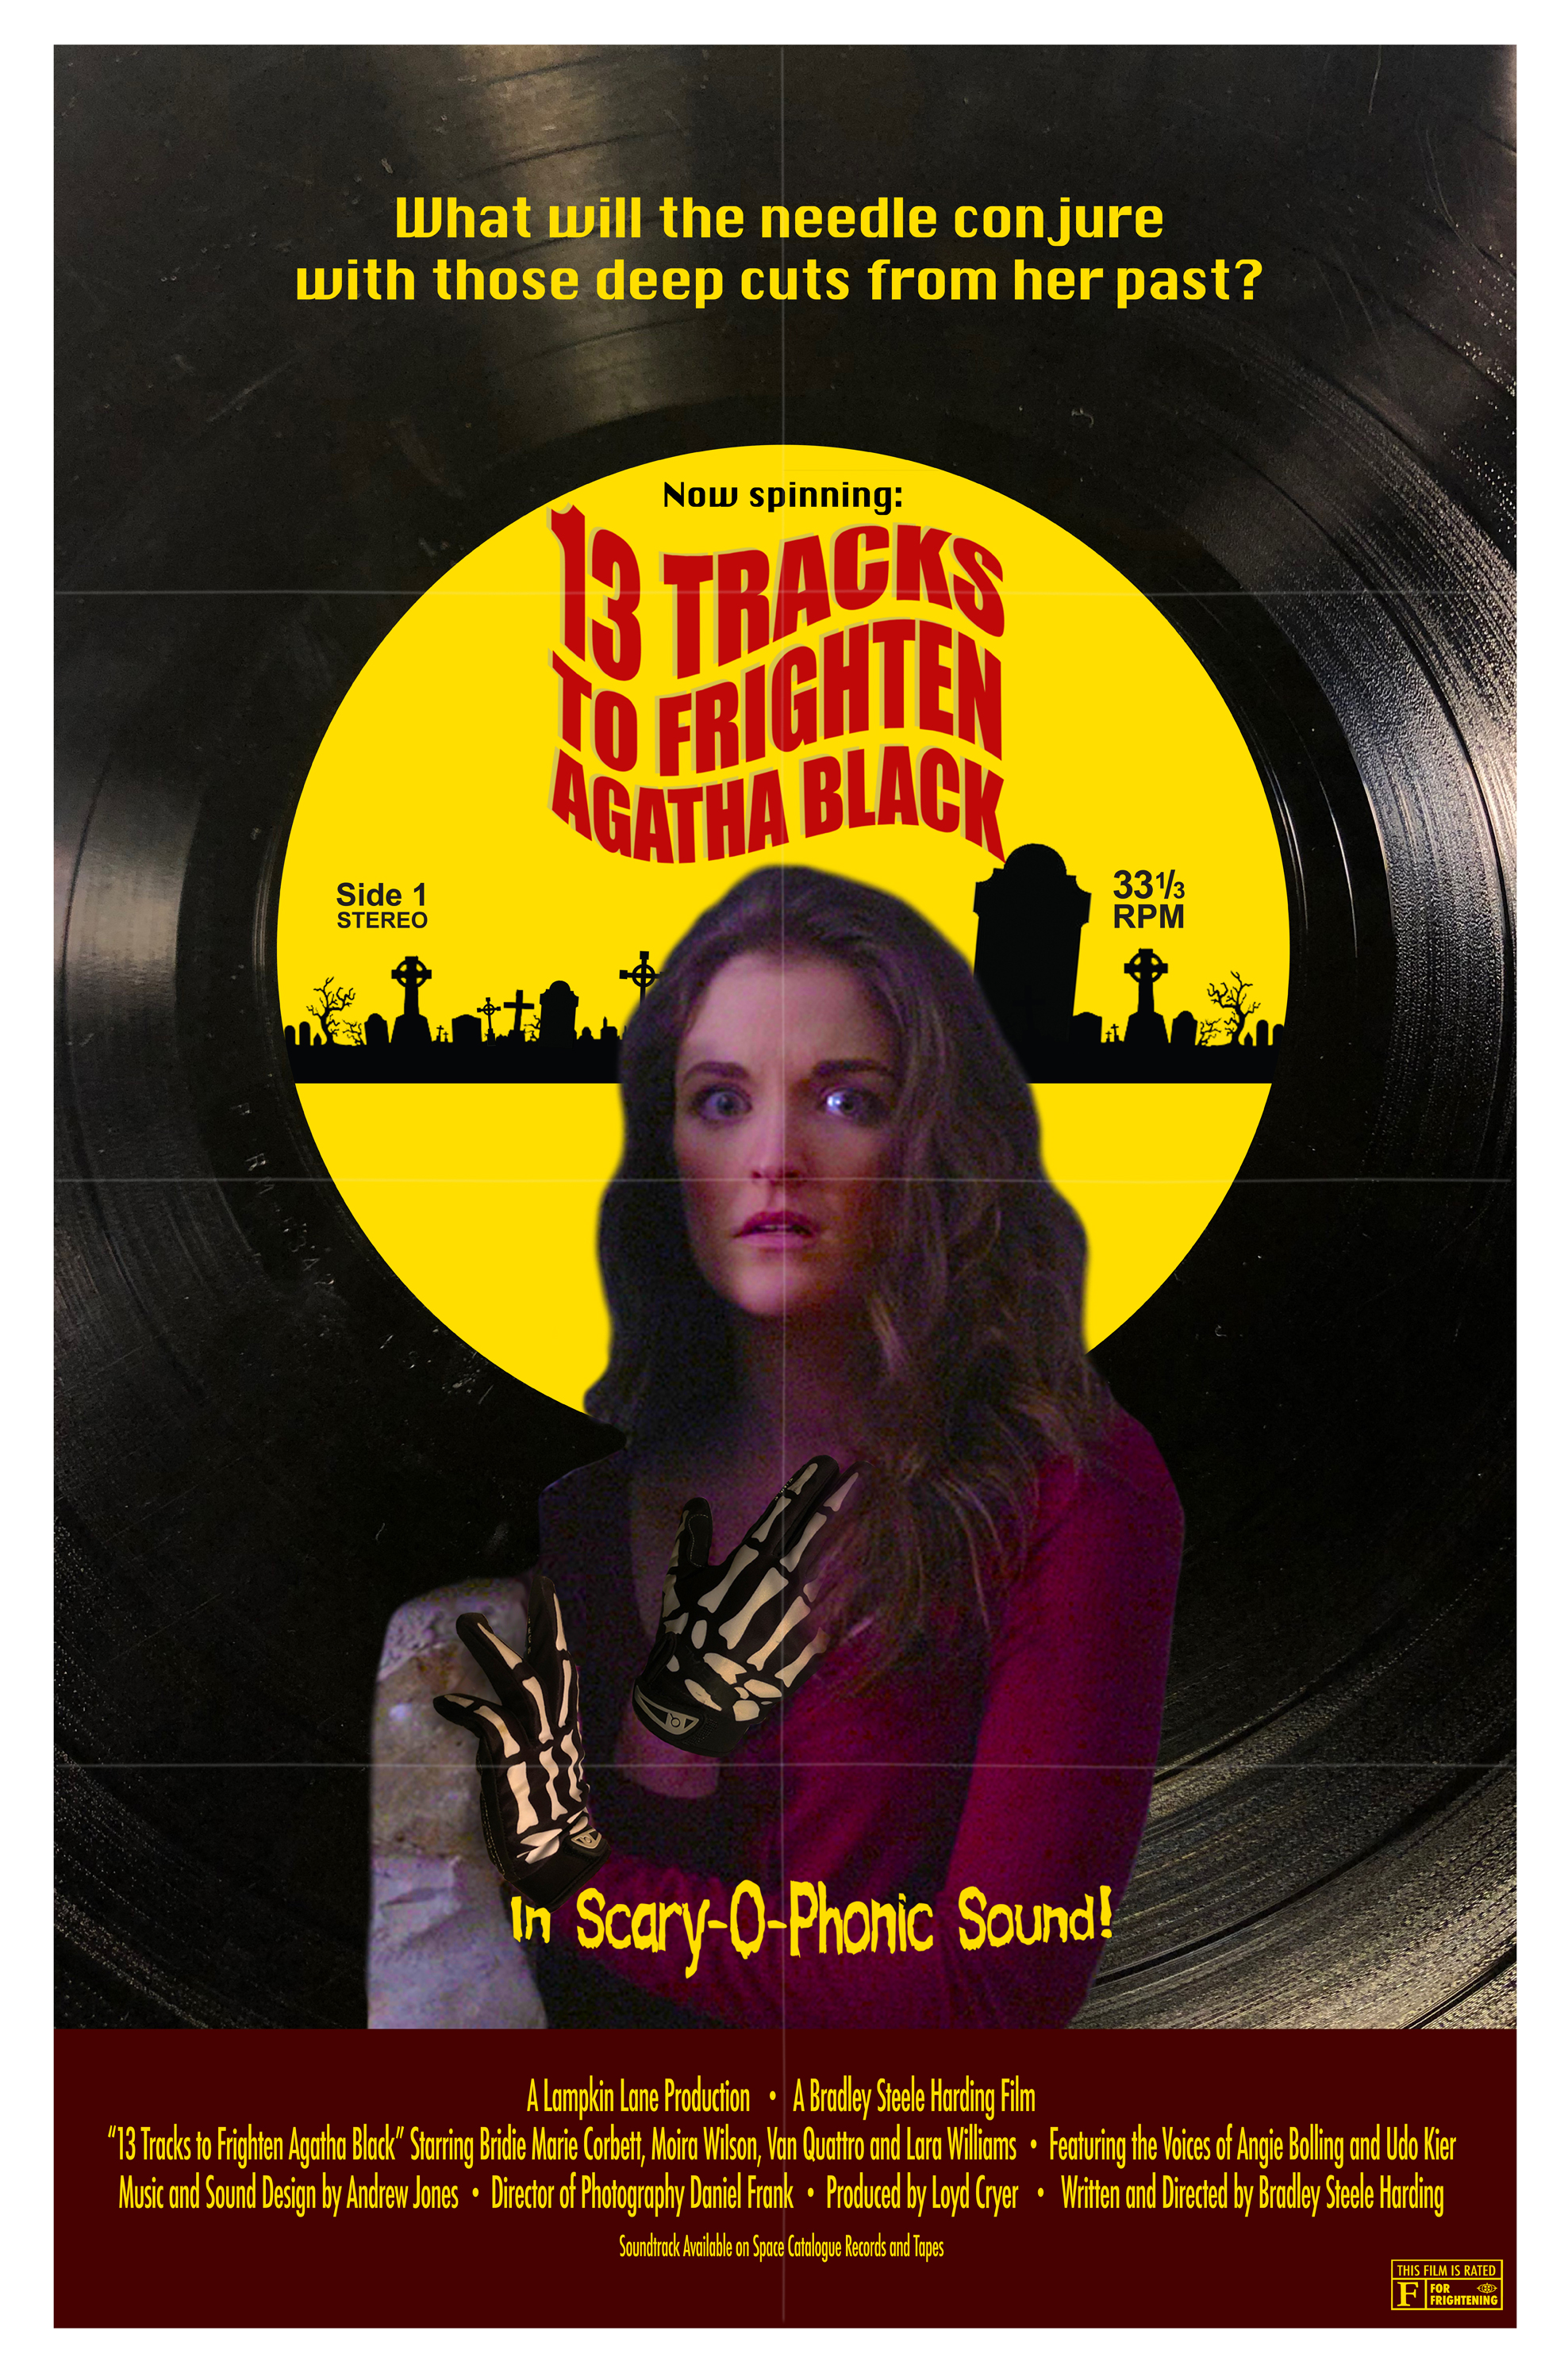 13 Tracks to Frighten Agatha Black (2019)